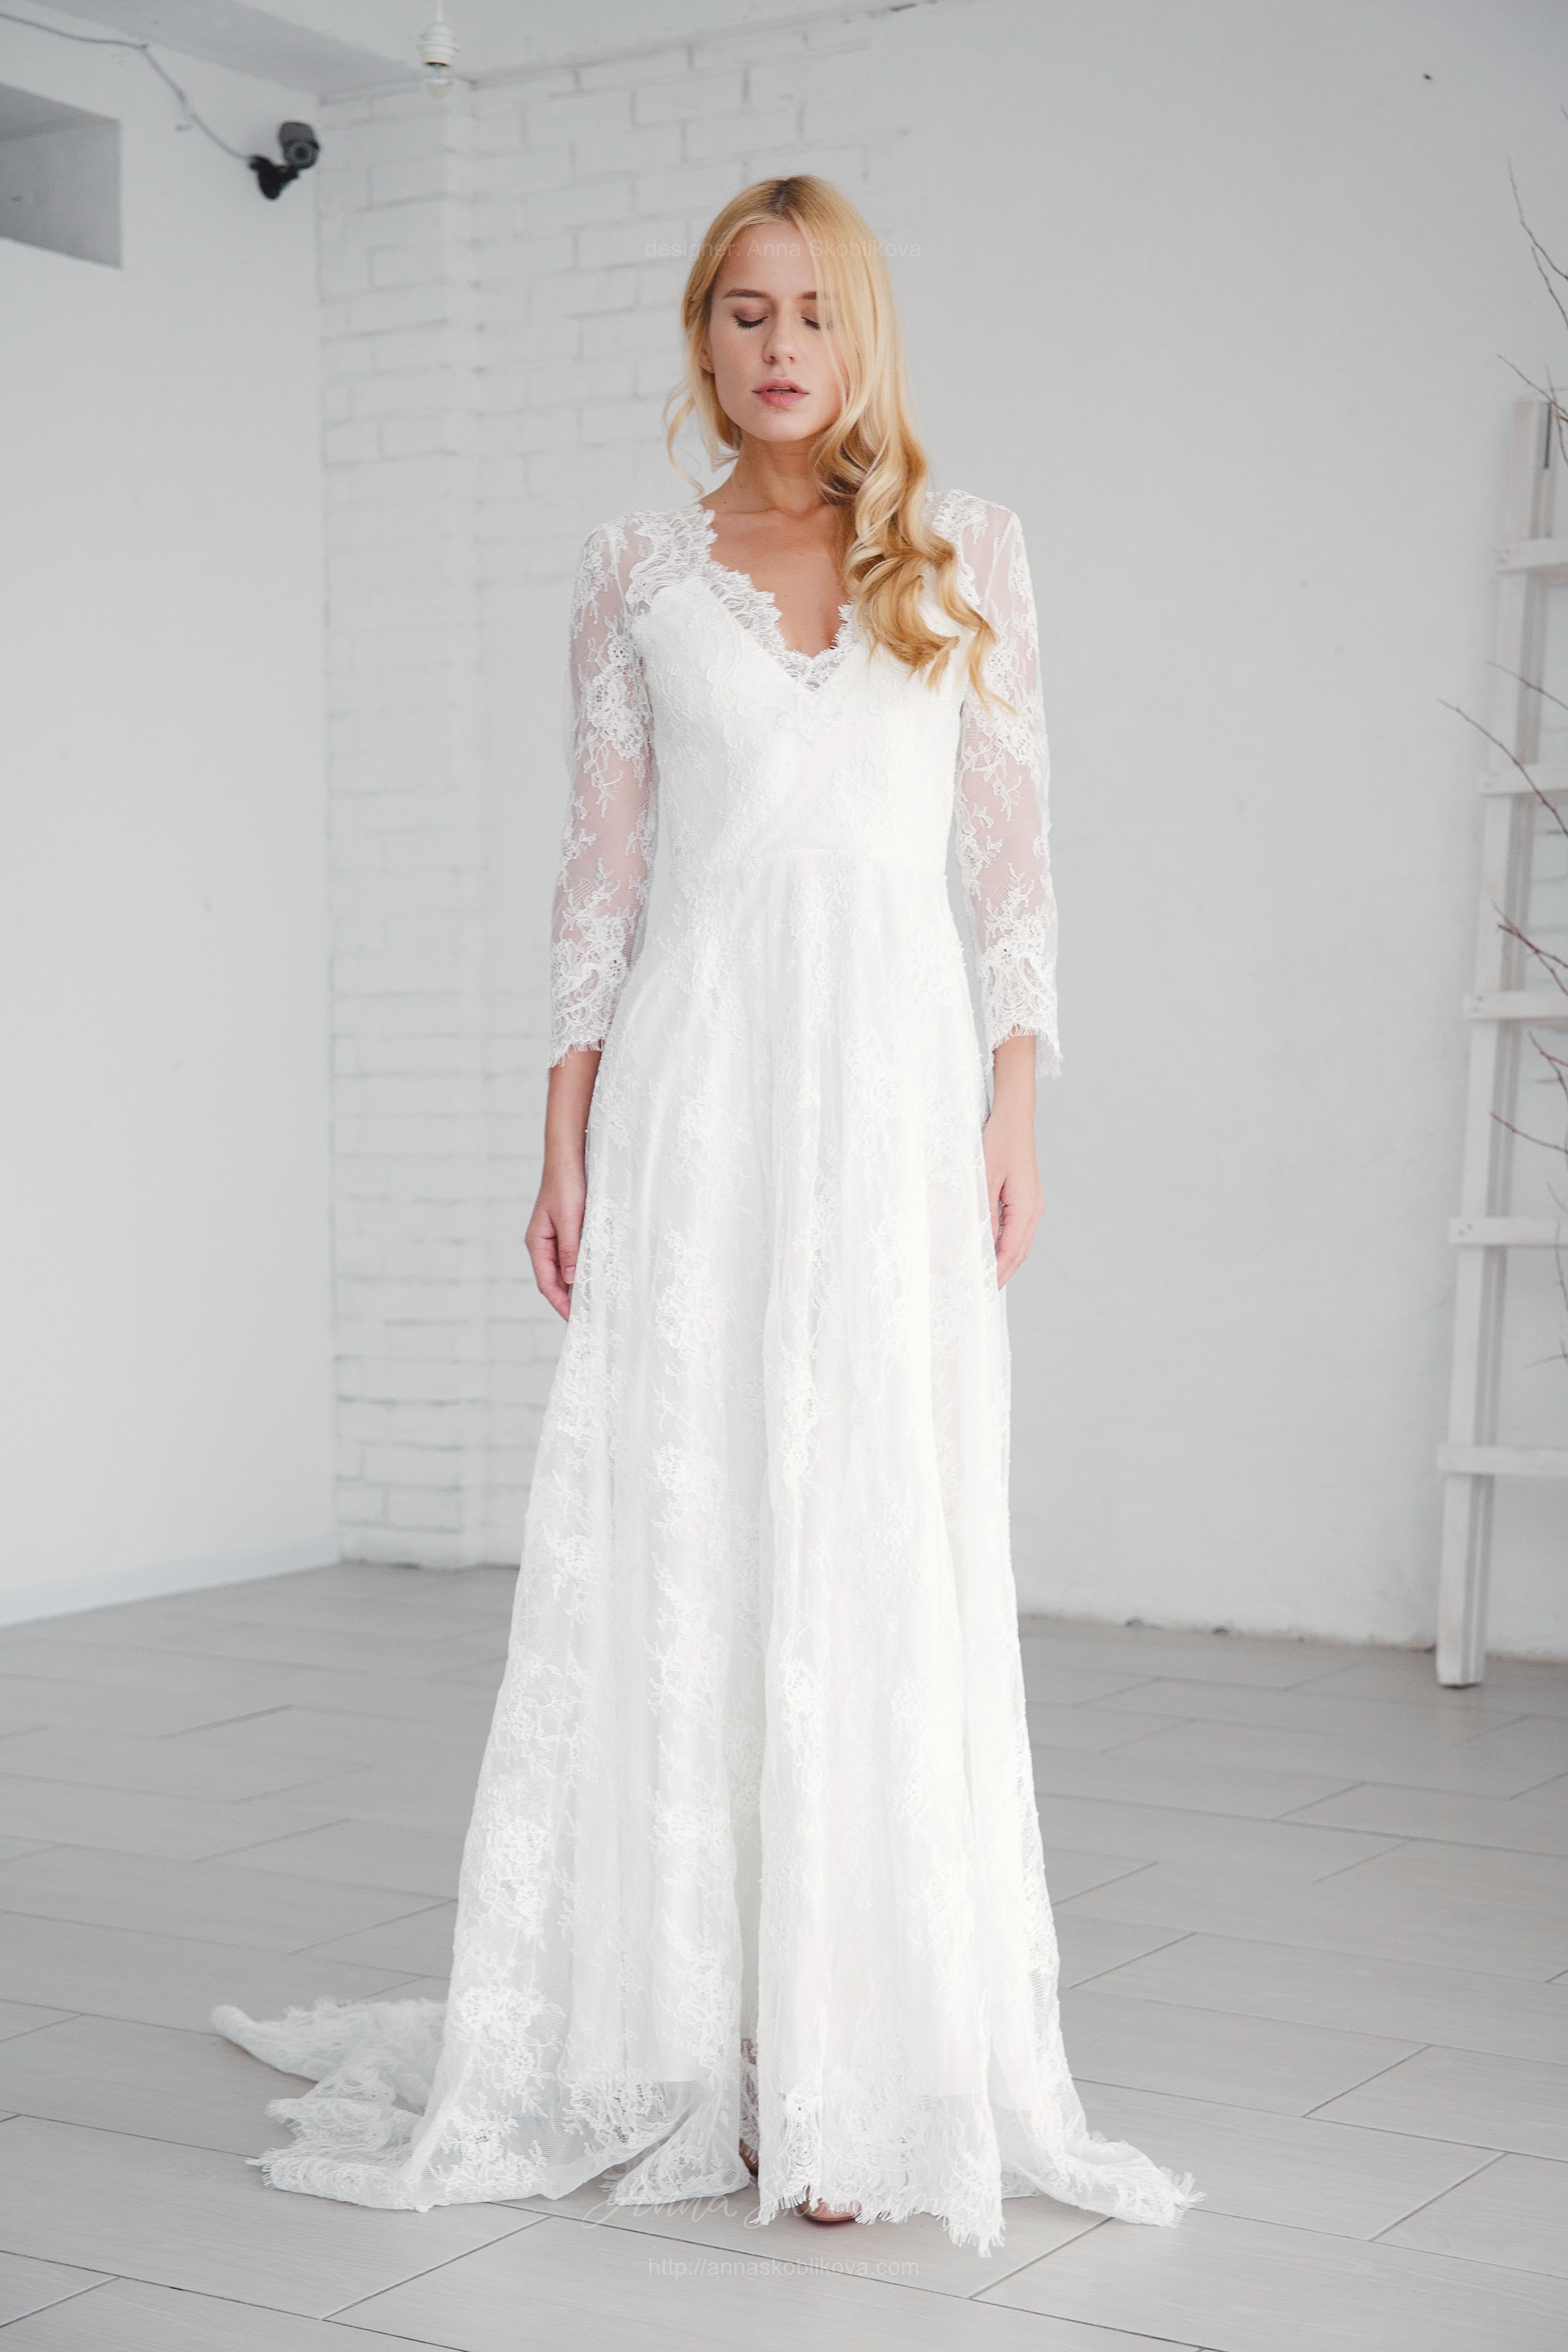 Real Princess Wedding Dress Anna Skoblikova Wedding Dresses And Evening Gowns 5668